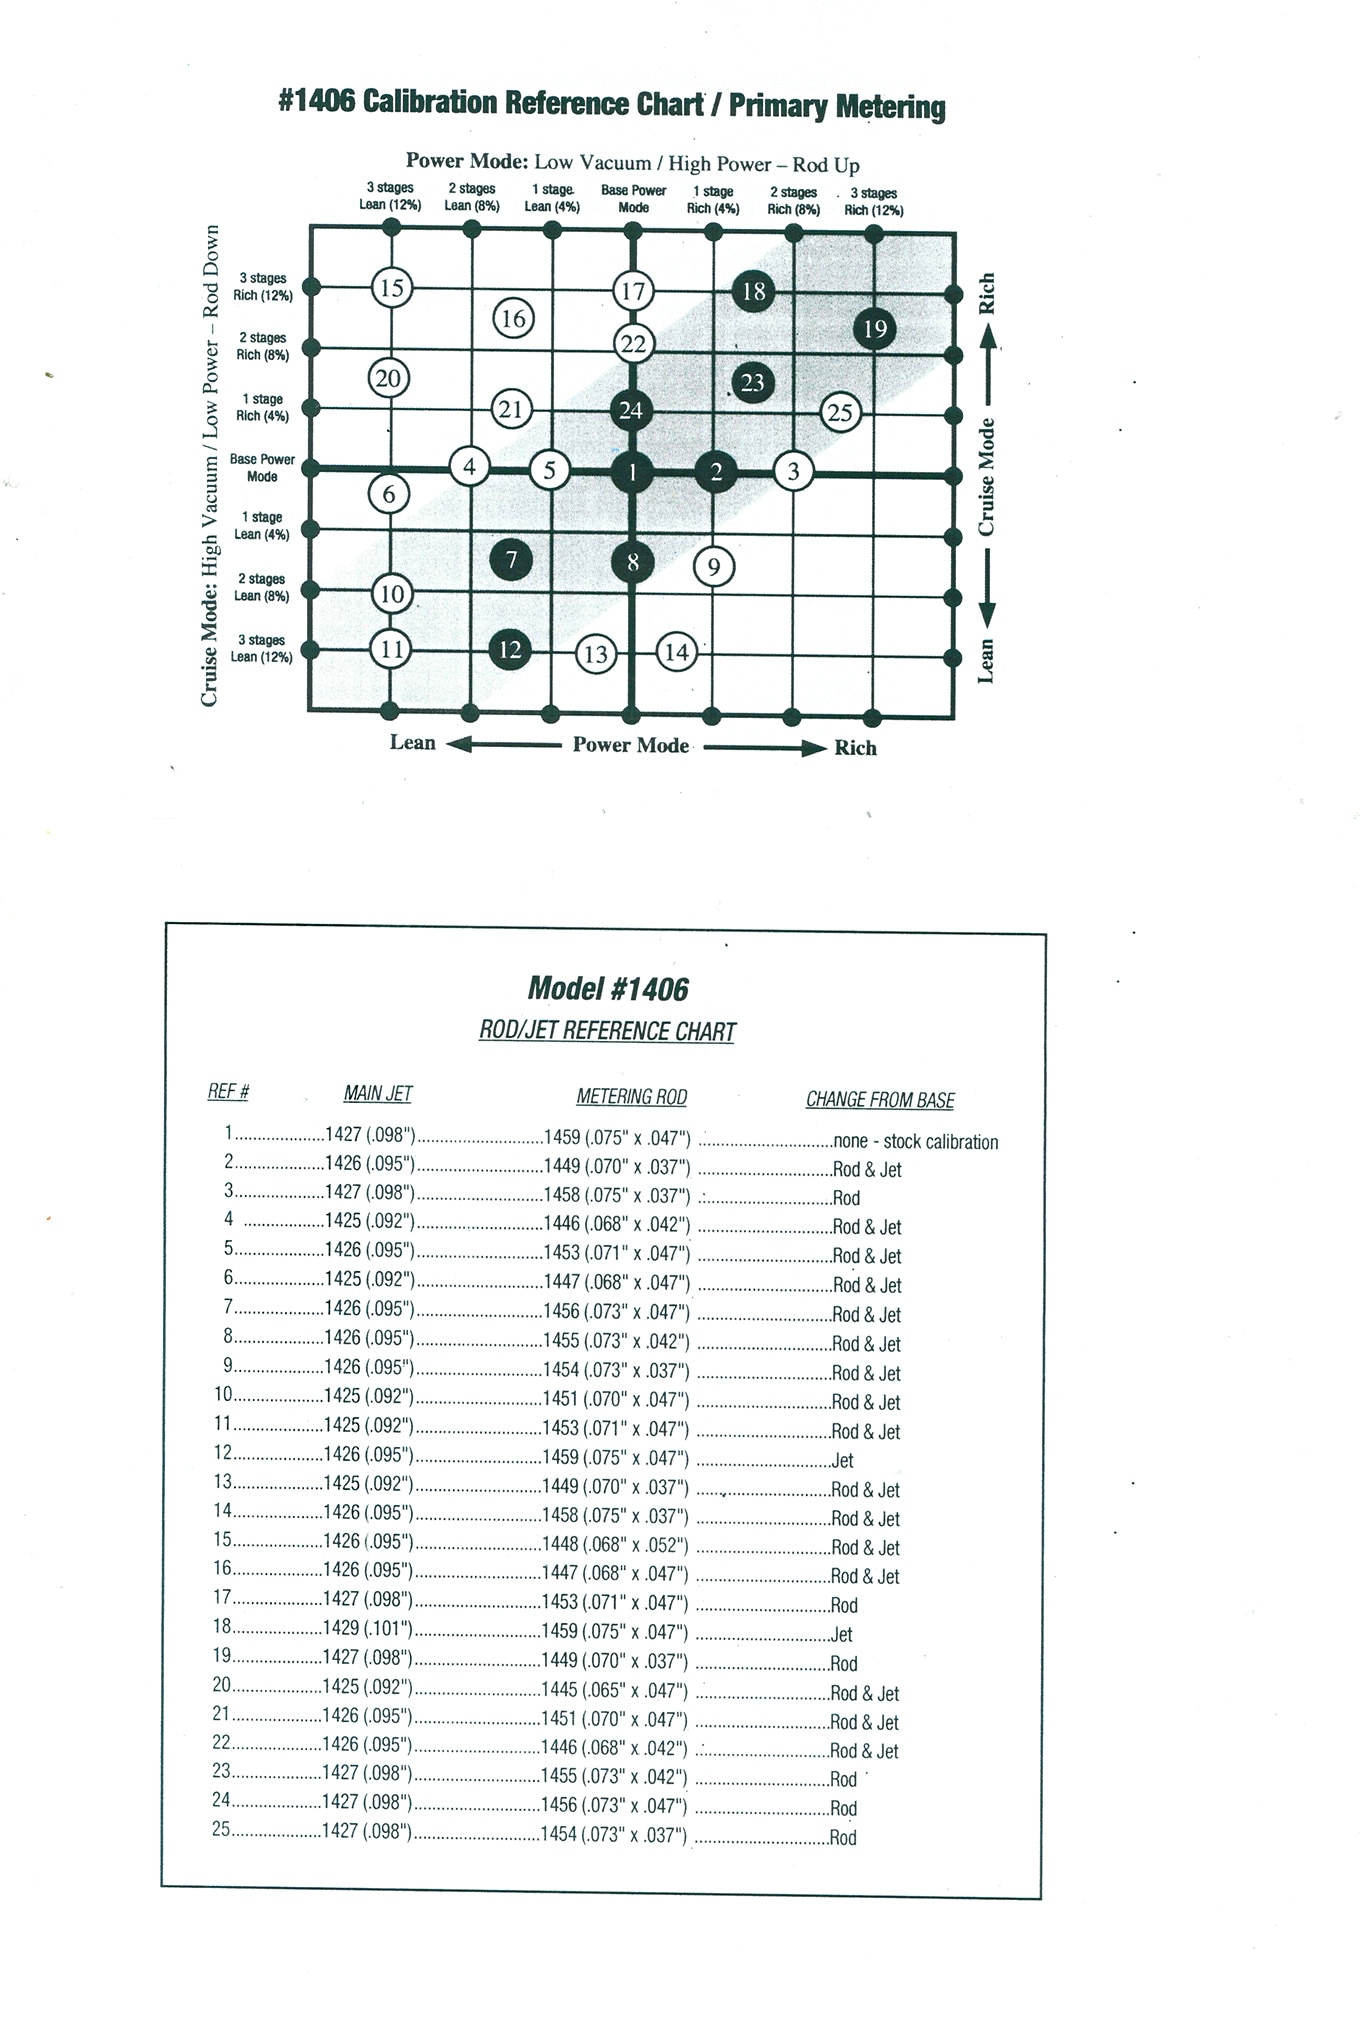 edelbrock 1405 diagram